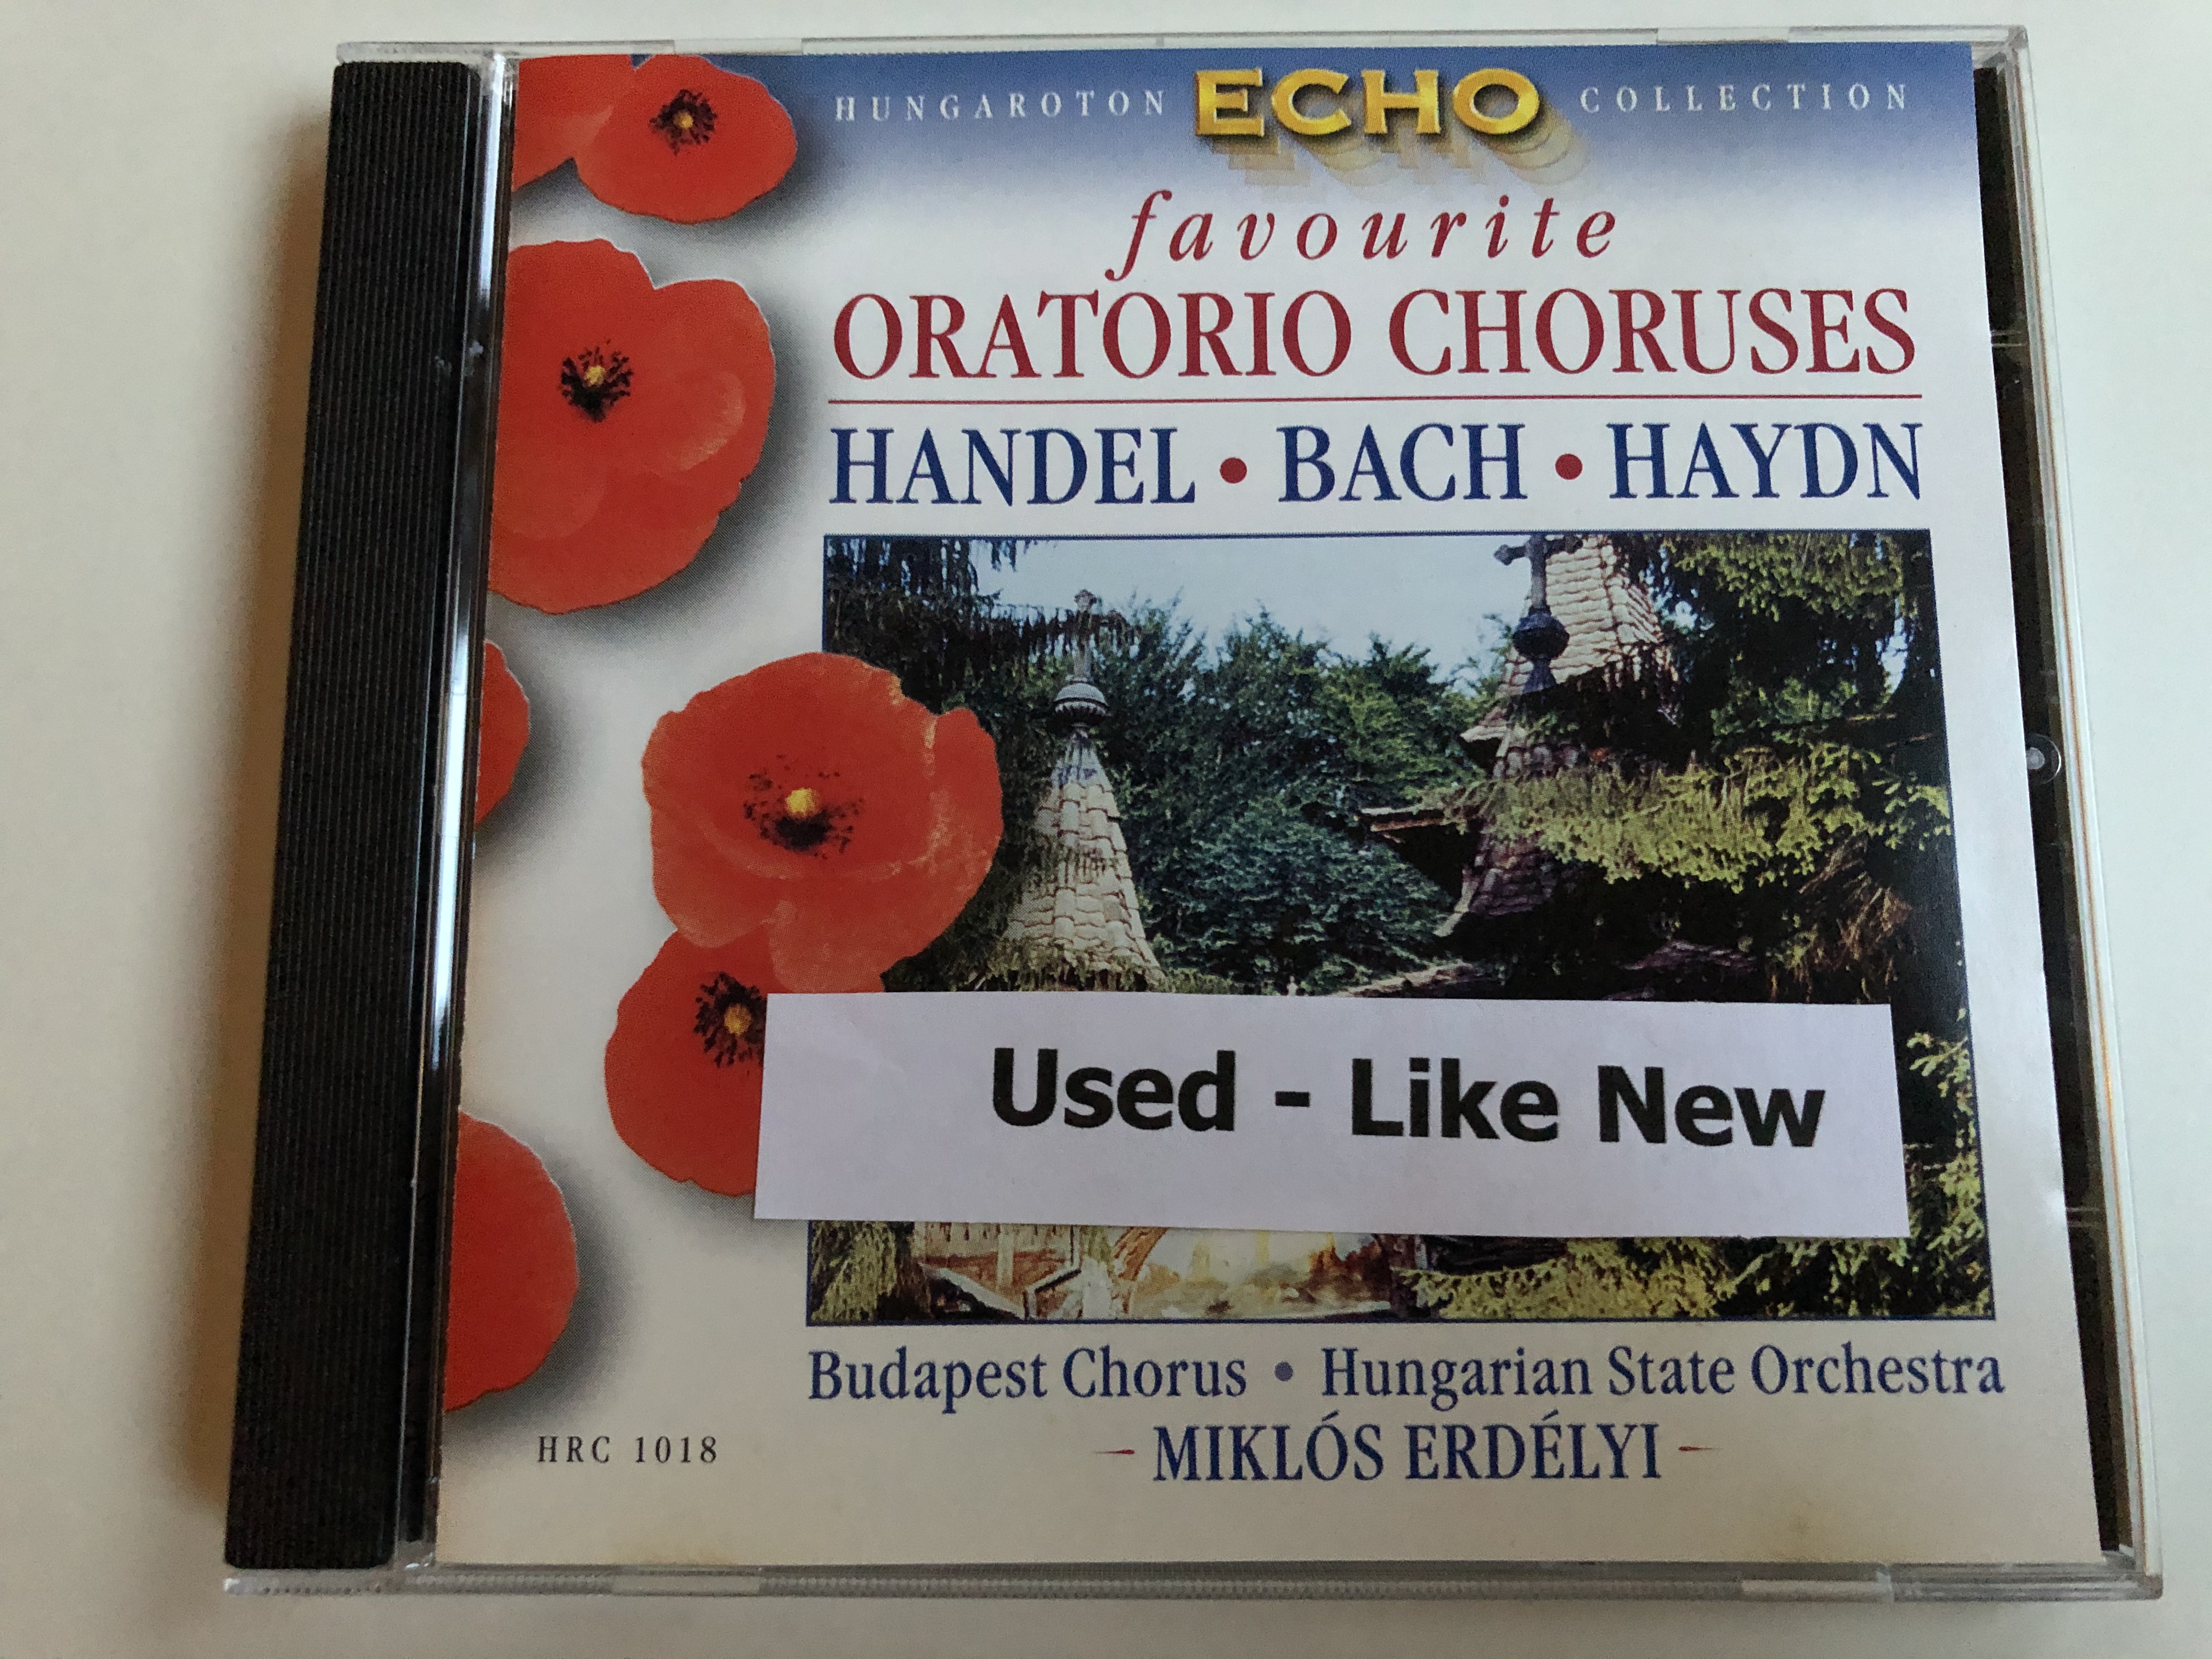 favourite-oratorio-choruses-handel-bach-haydn-budapest-chorus-hungarian-state-orchestra-conducted-mikl-s-erd-lyi-hungaroton-audio-cd-1963-stereo-hrc-1018-1-.jpg